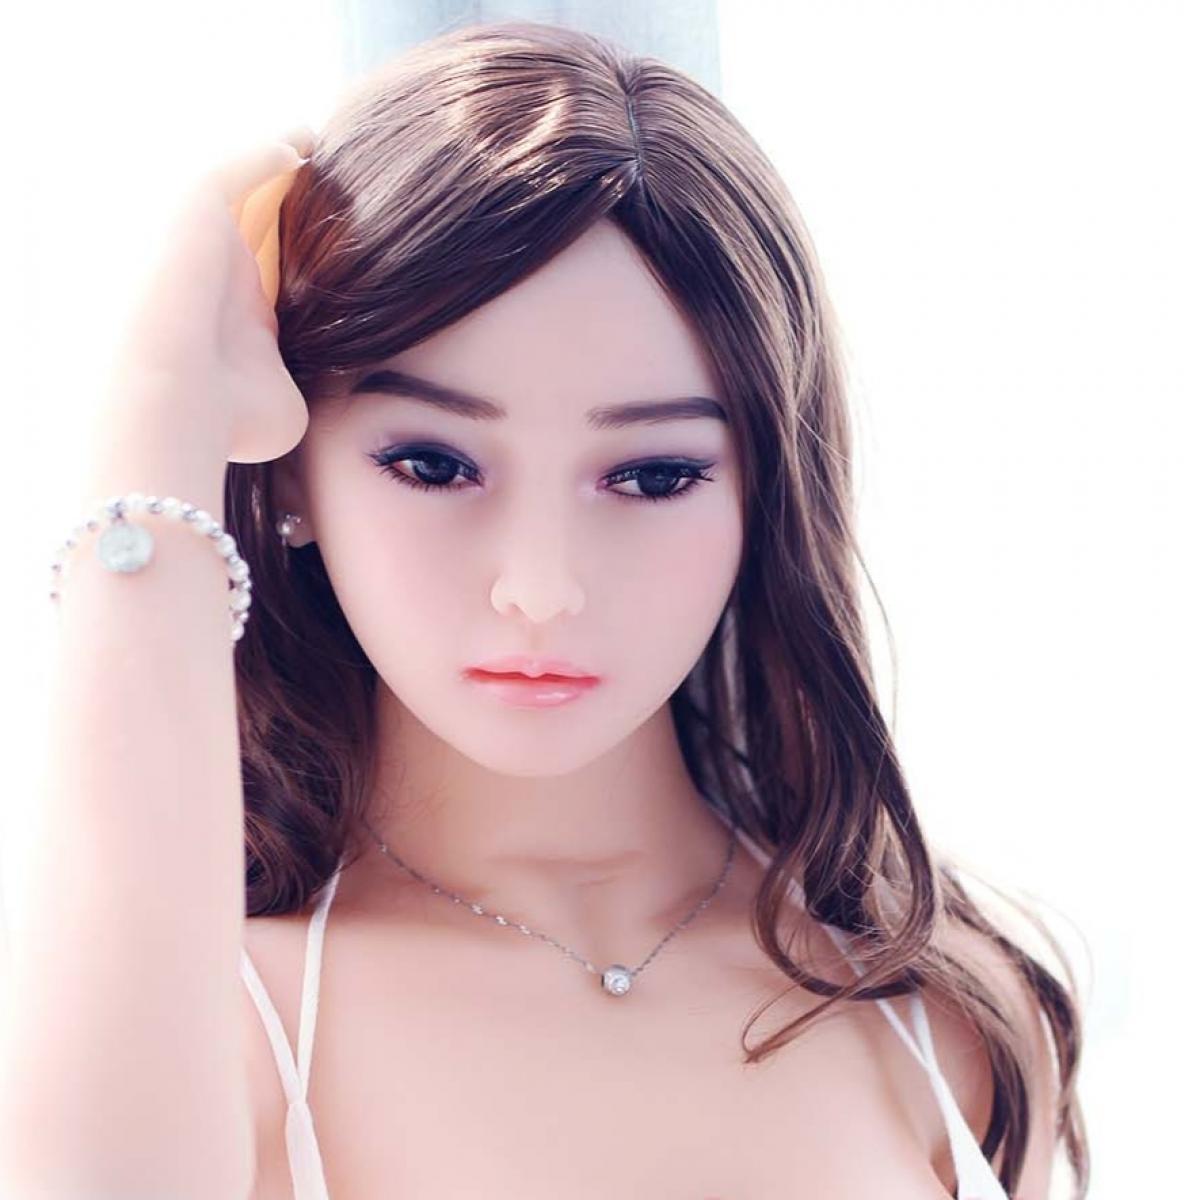 Neodoll Sugar Babe - 52 - Sex Doll Head - M16 Compatible - Natural